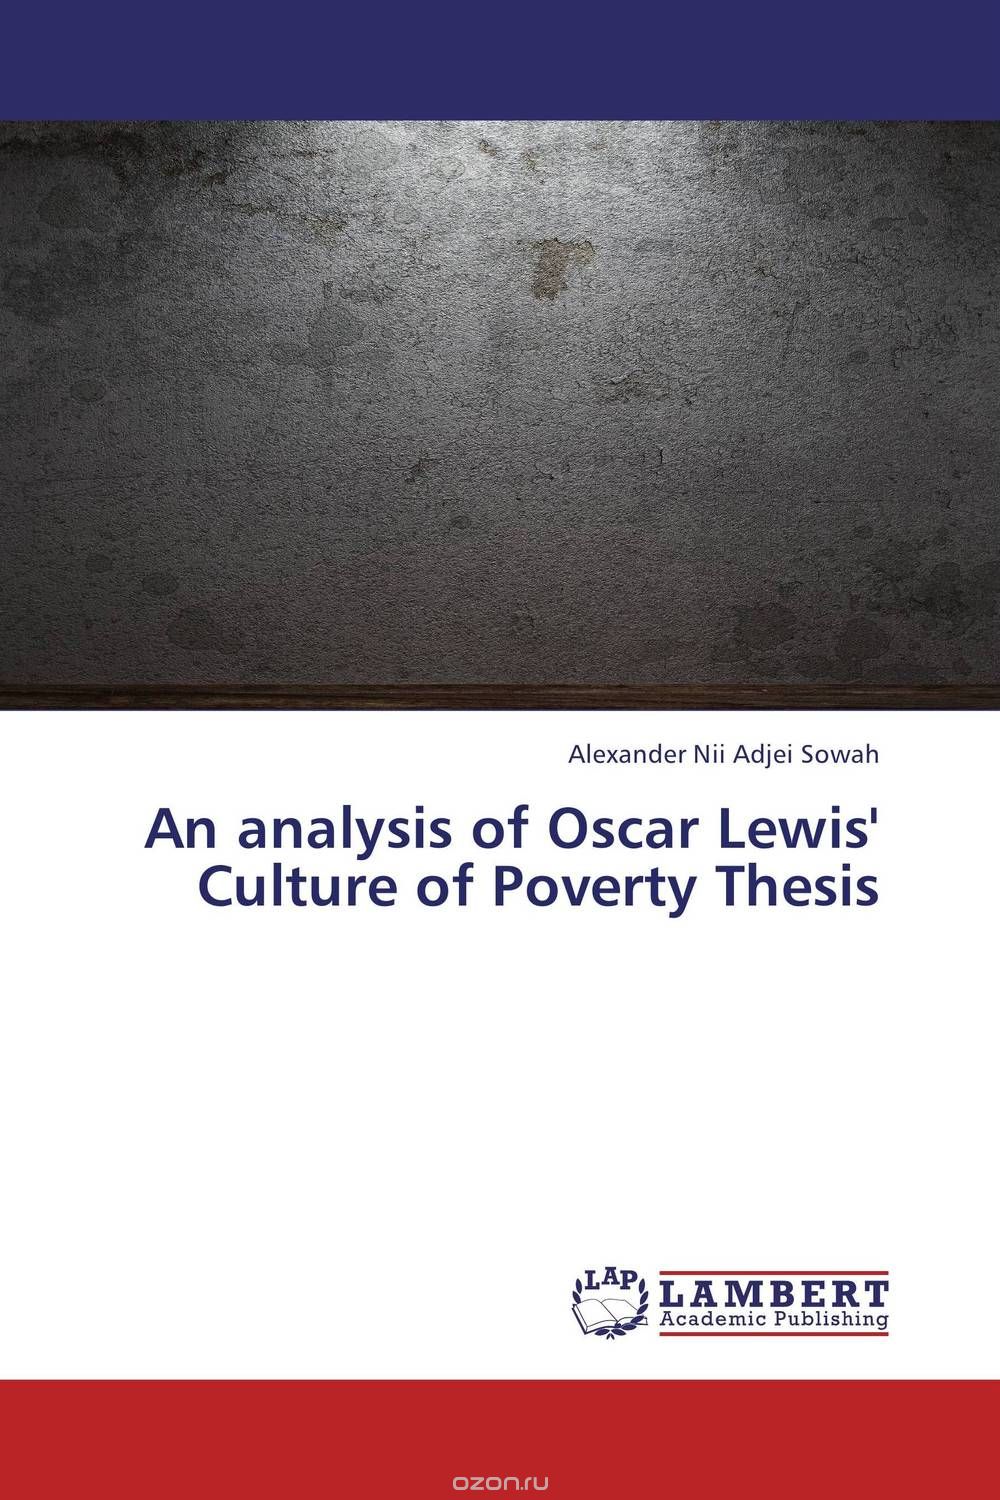 Скачать книгу "An analysis of Oscar Lewis' Culture of Poverty Thesis"